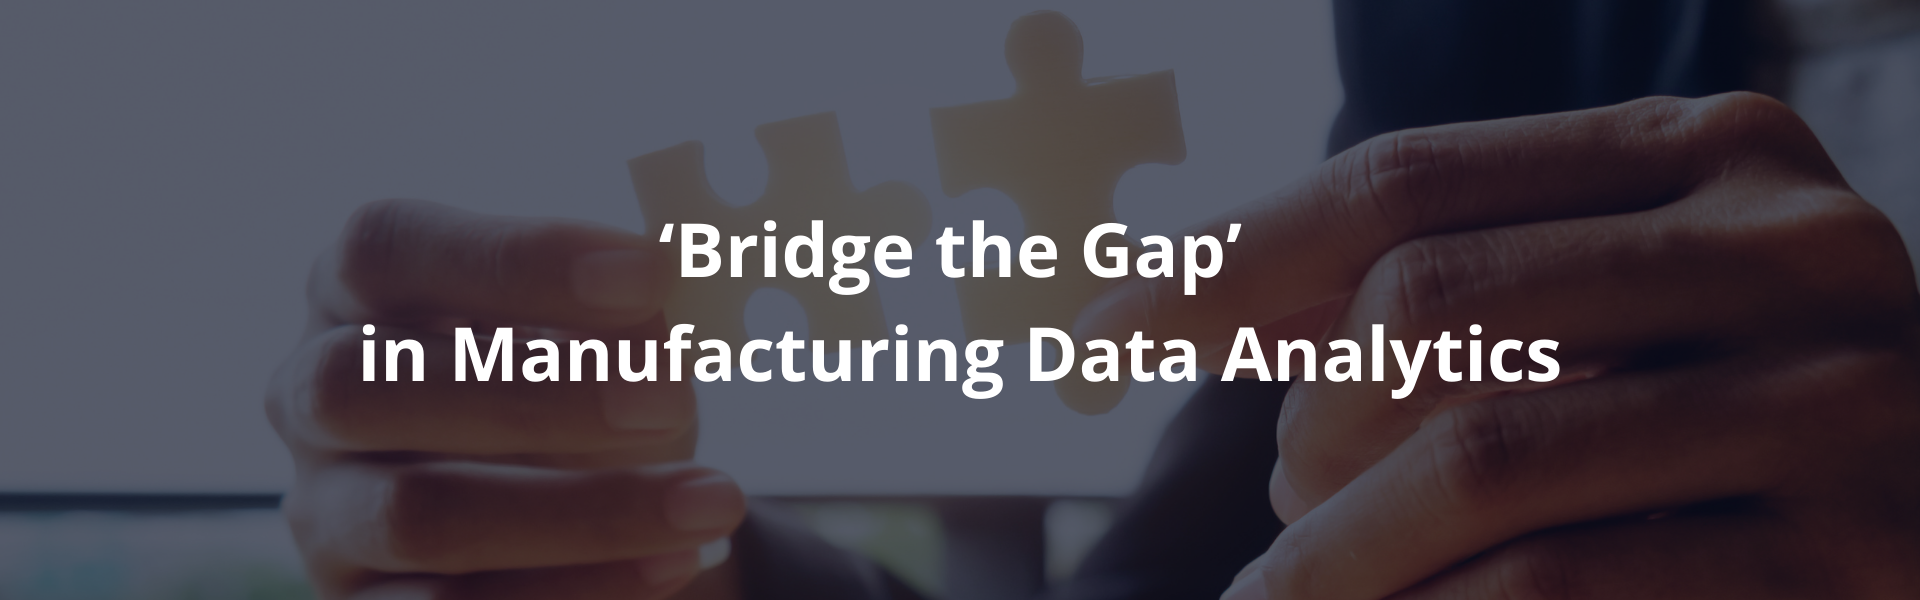 Bridge the Gap in Manufacturing Data Analytics